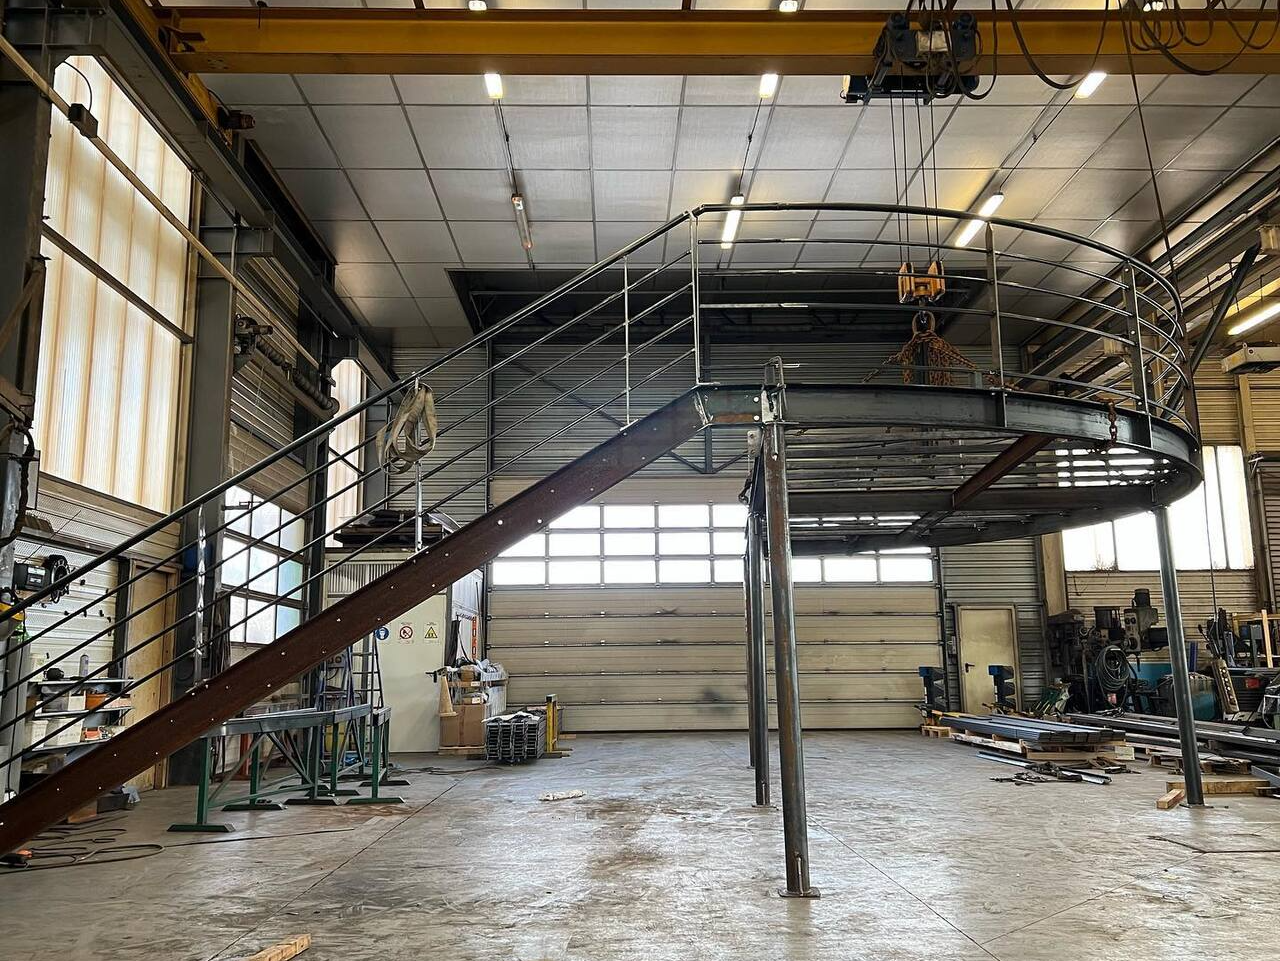 Escaliers et garde-corps métallique d'un hangar